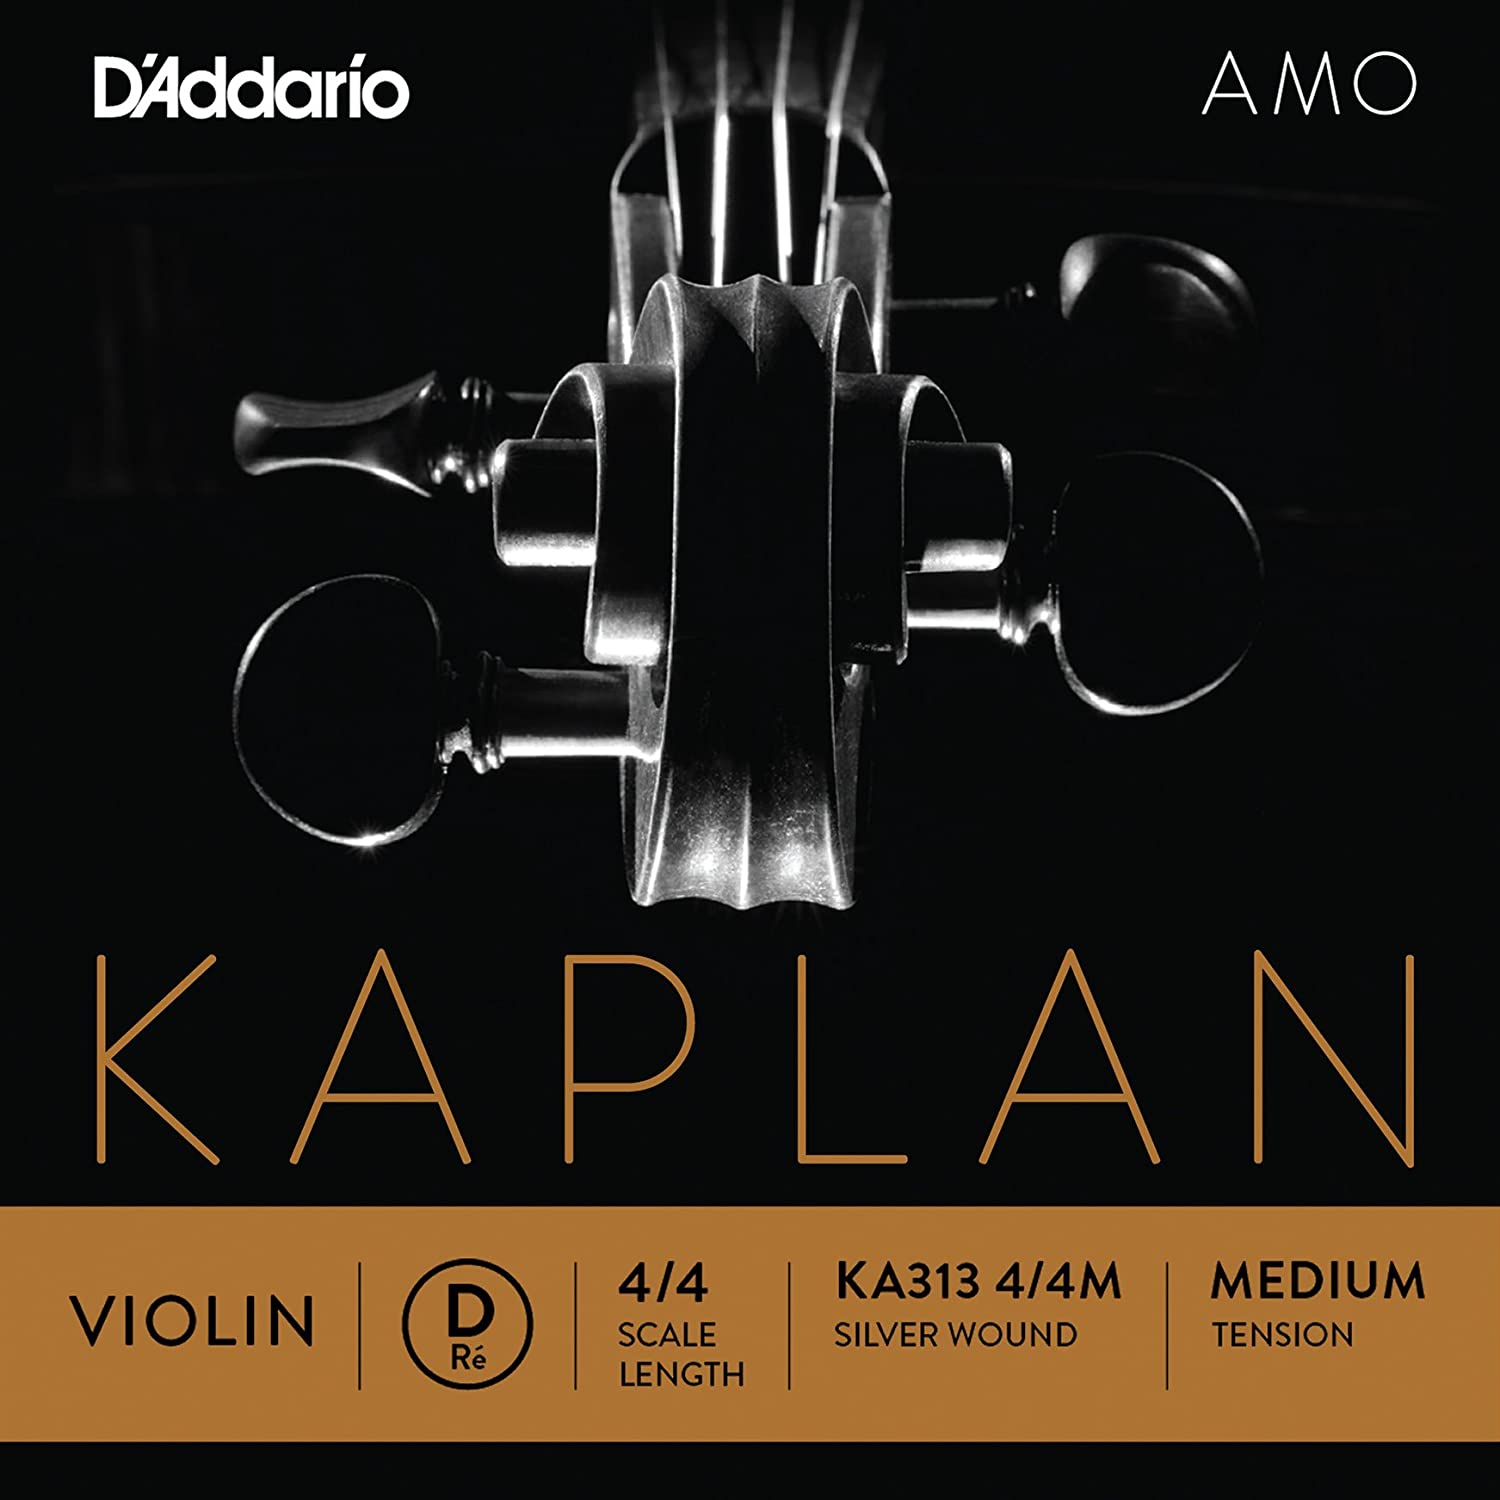 D'Addario Kaplan Amo Violin D String